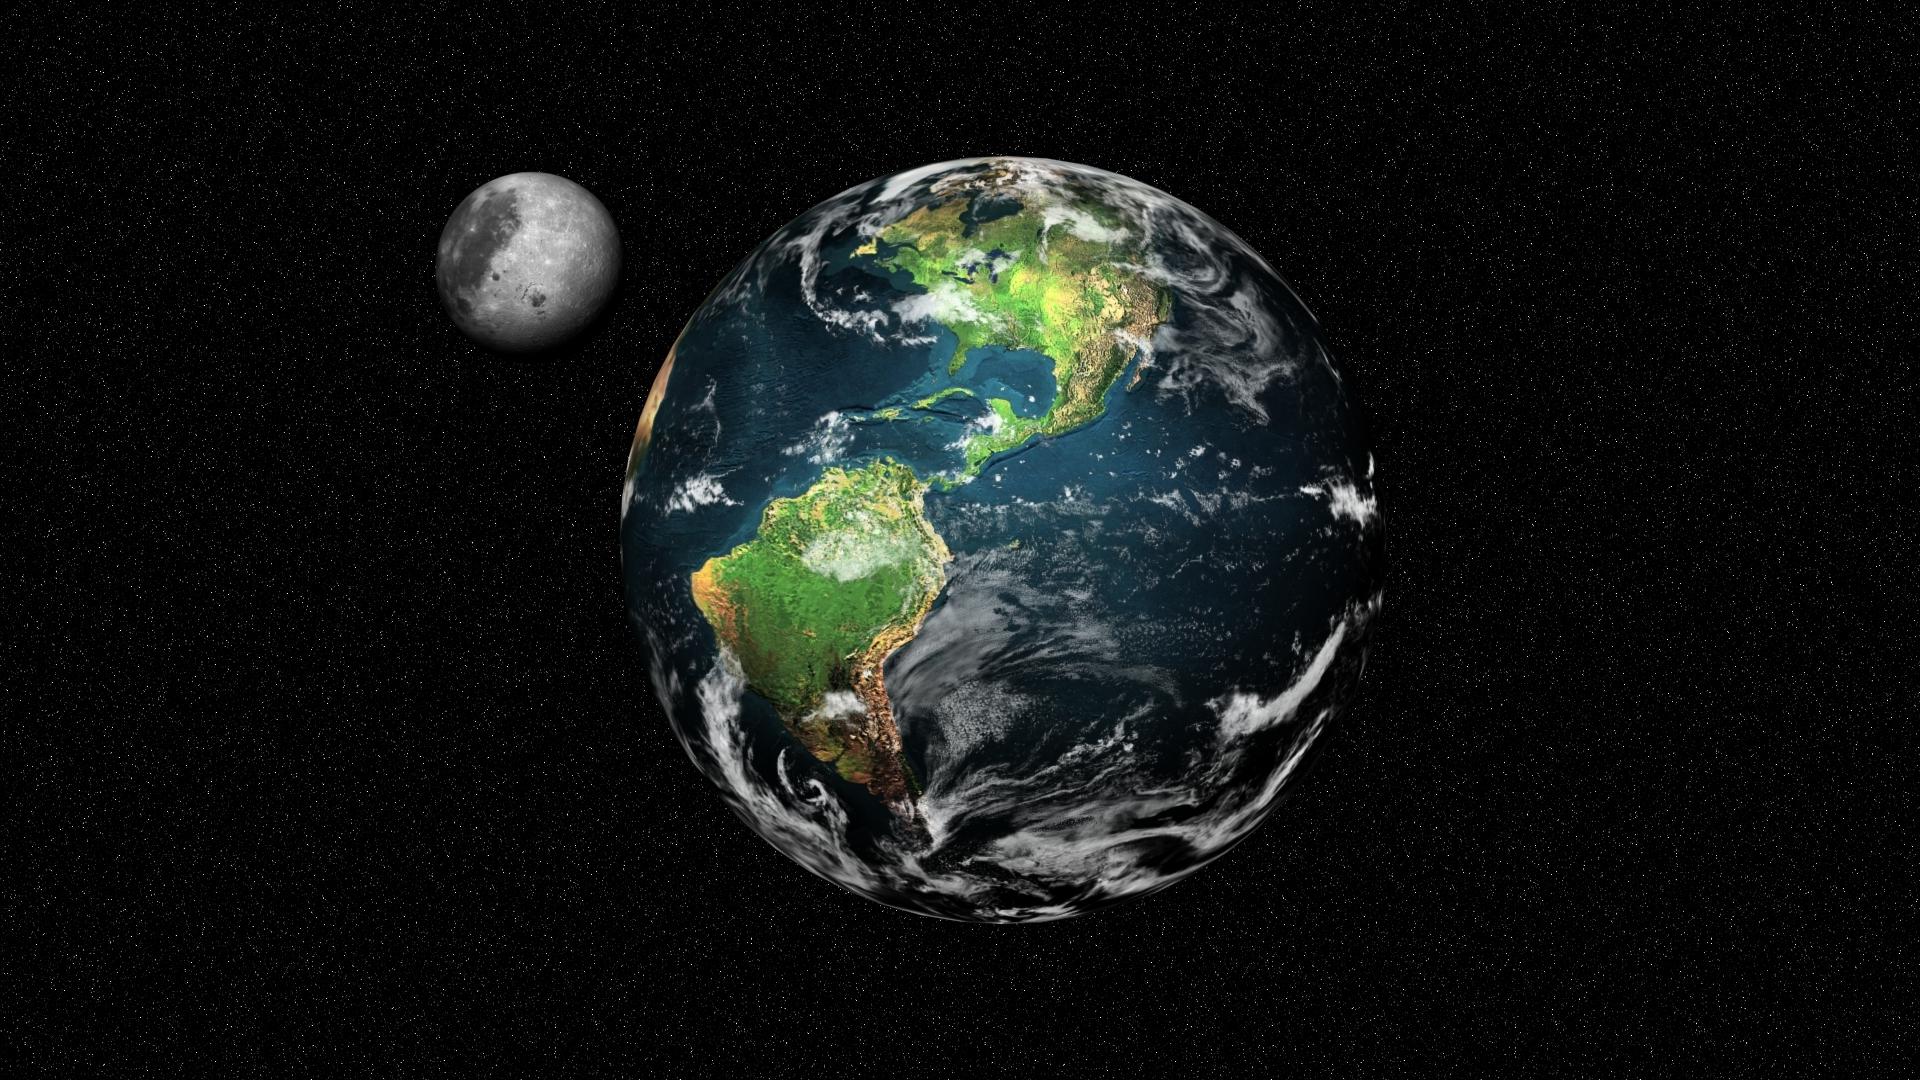 [45+] Earth and Moon Wallpaper | WallpaperSafari